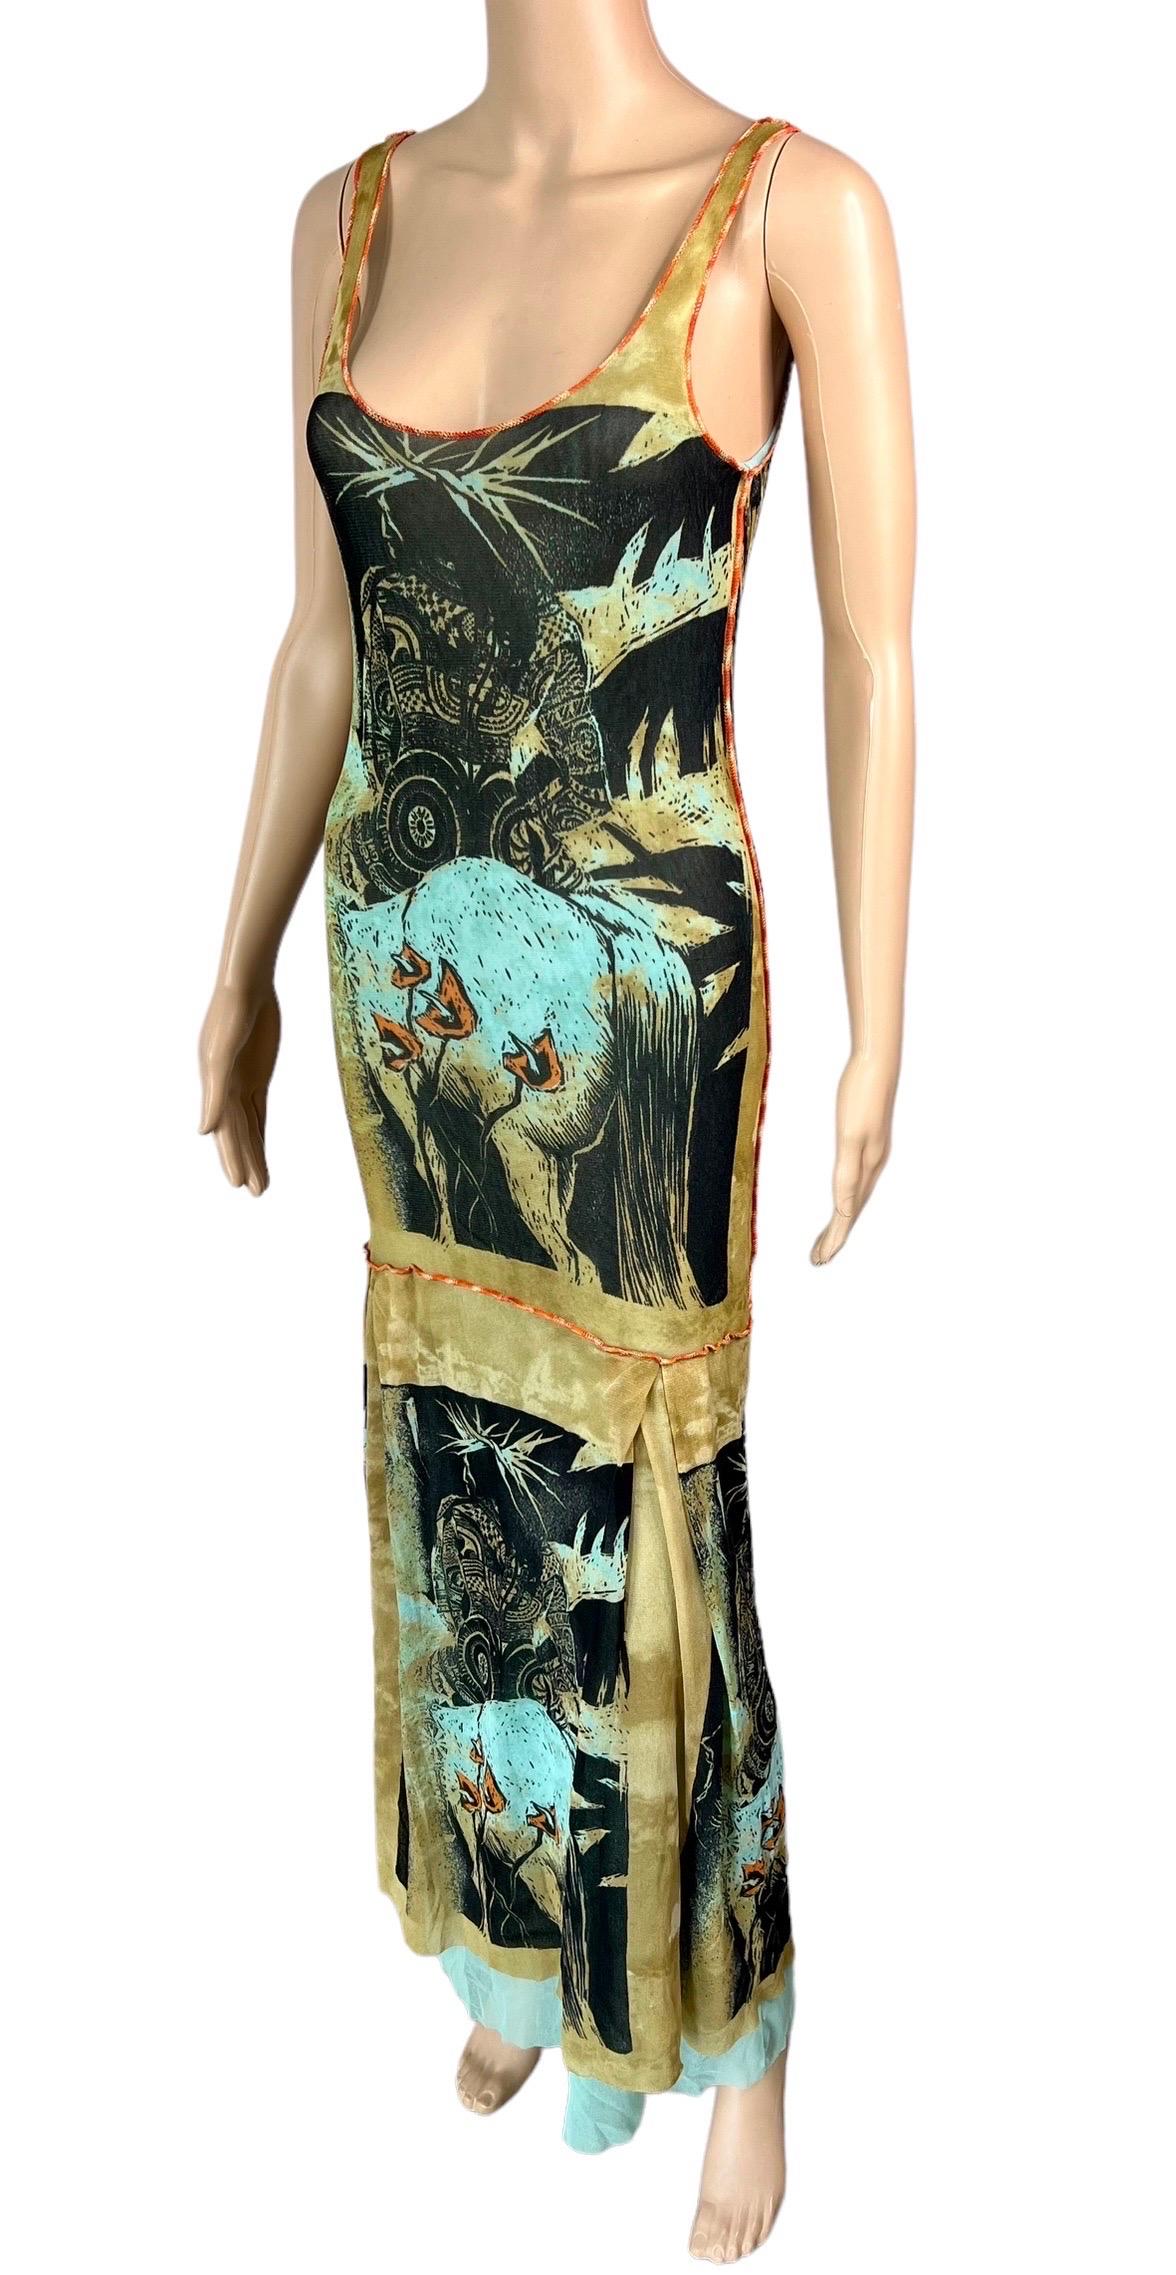 Women's or Men's Jean Paul Gaultier Classique S/S 2000 Vintage Semi-Sheer Mesh Maxi Dress For Sale